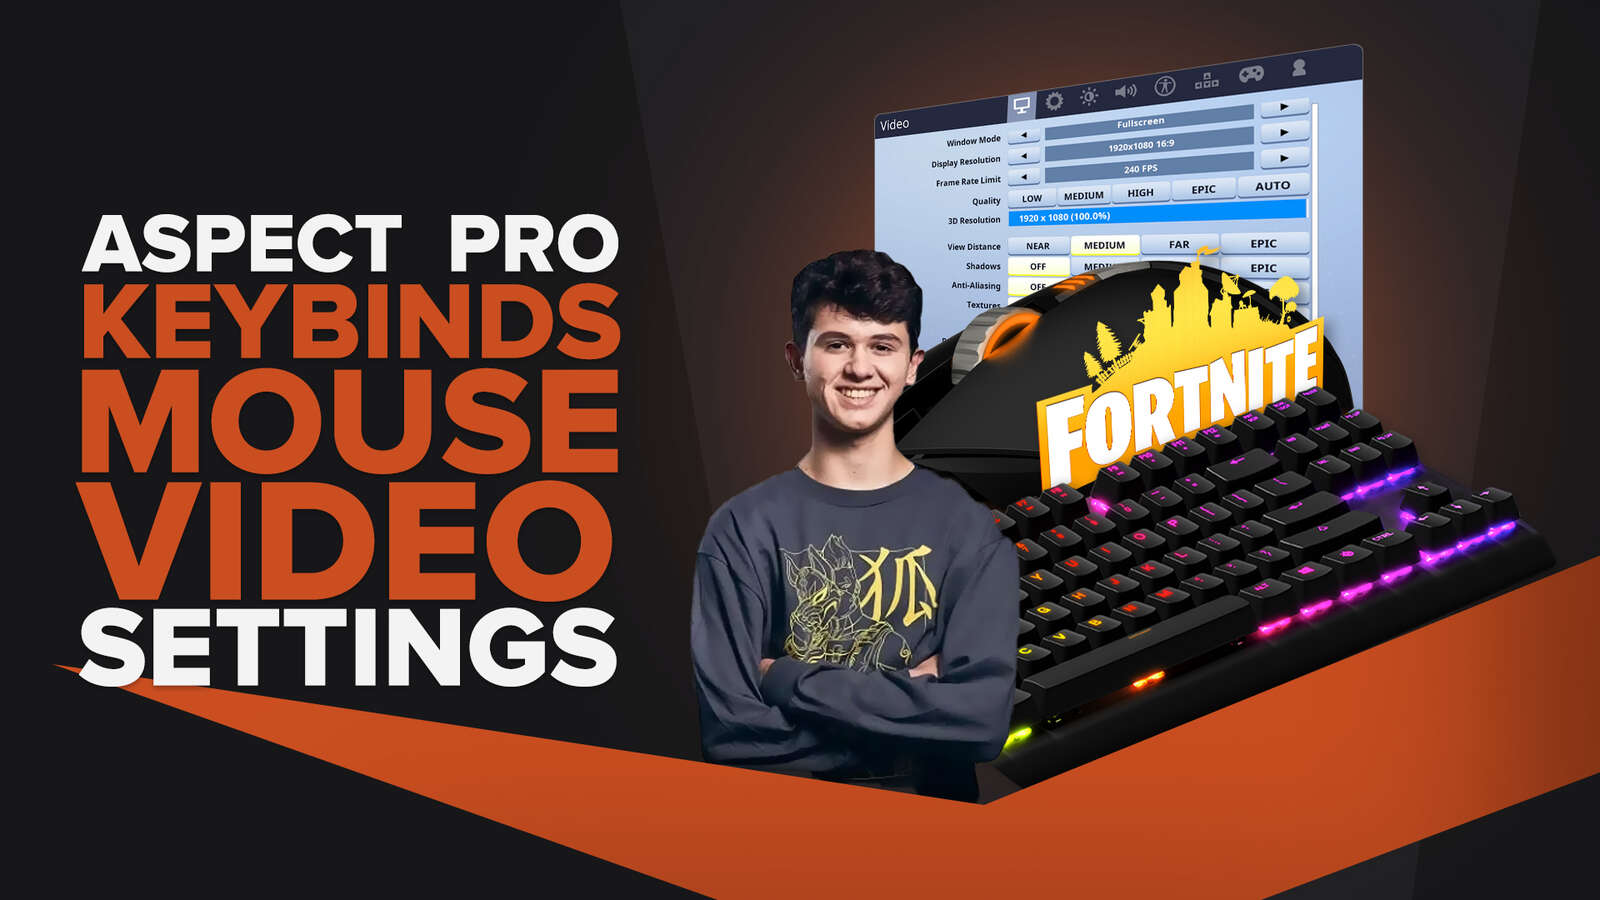 Aspect | Keybinds, Mouse, Video Pro Fortnite Settings